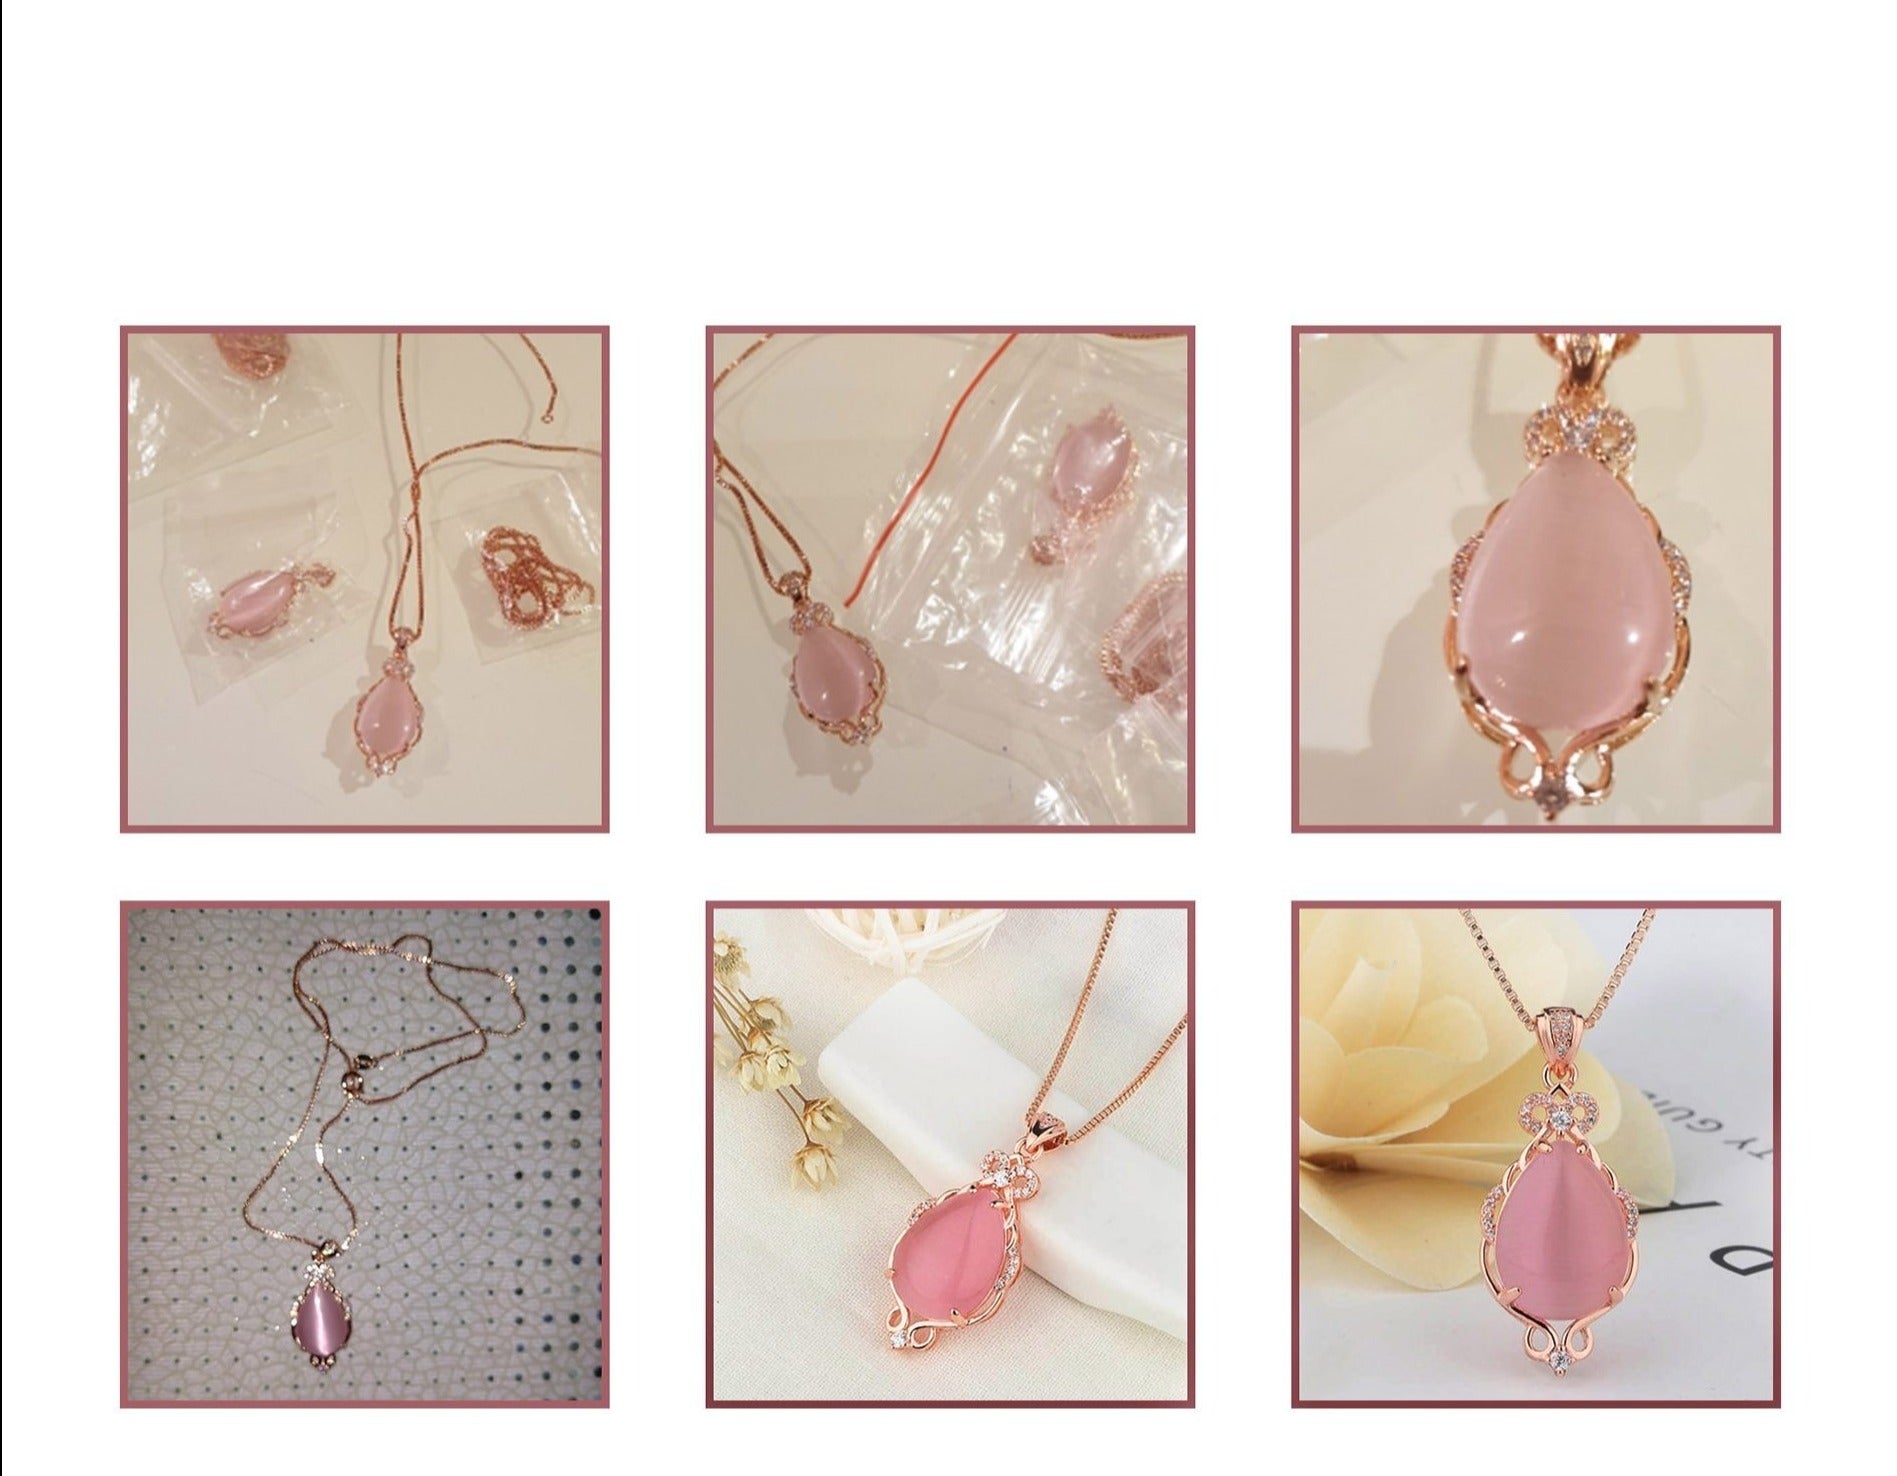 Silver 925 Jewelry Necklace with Water drop shape Pink rose quartz zircon gemstones Pendant for Women